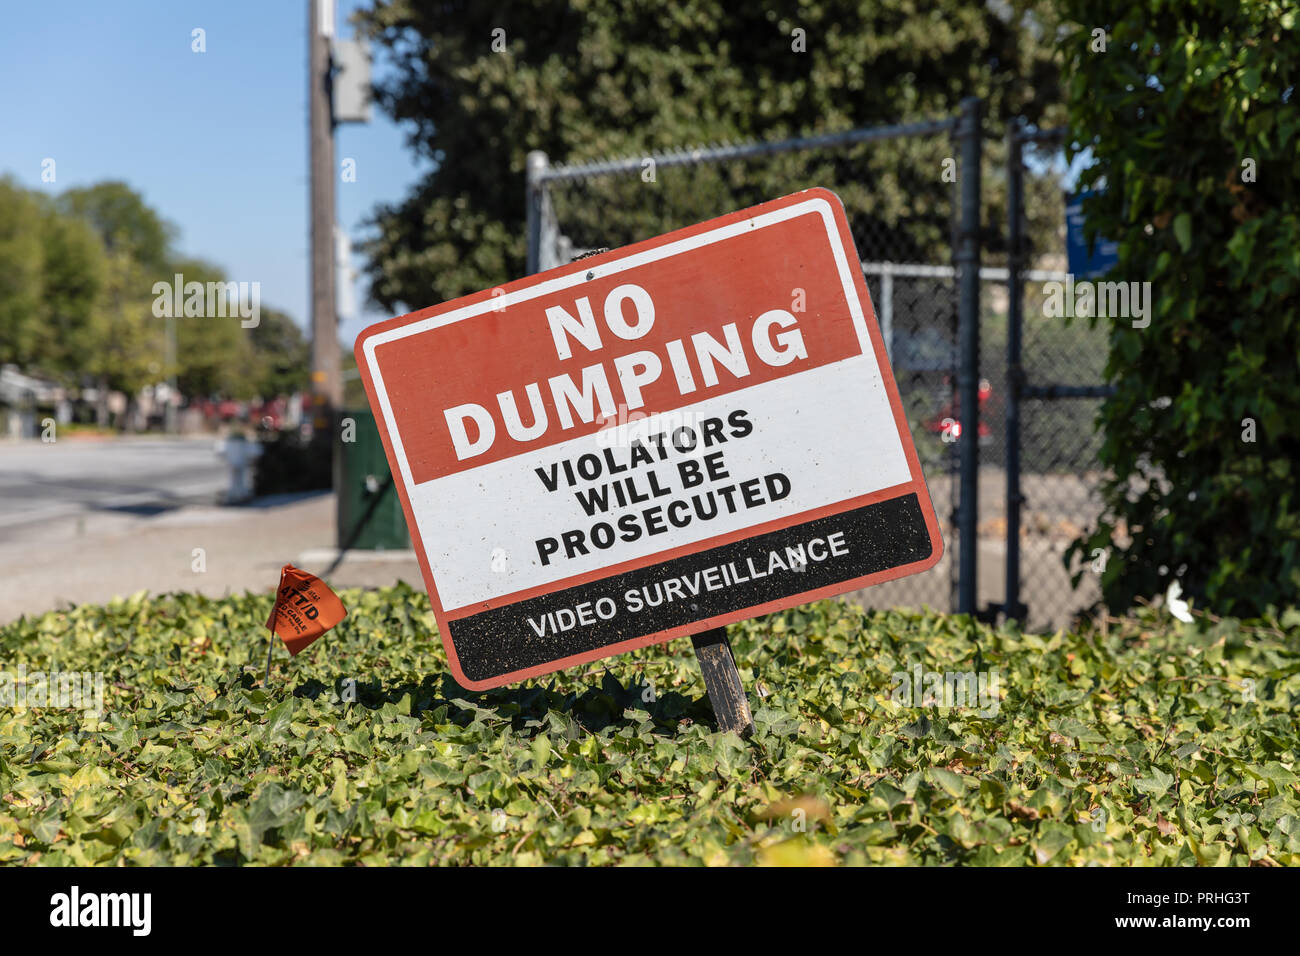 No dumping – Violators will be prosecuted – Video surveillance, sign; California, USA Stock Photo